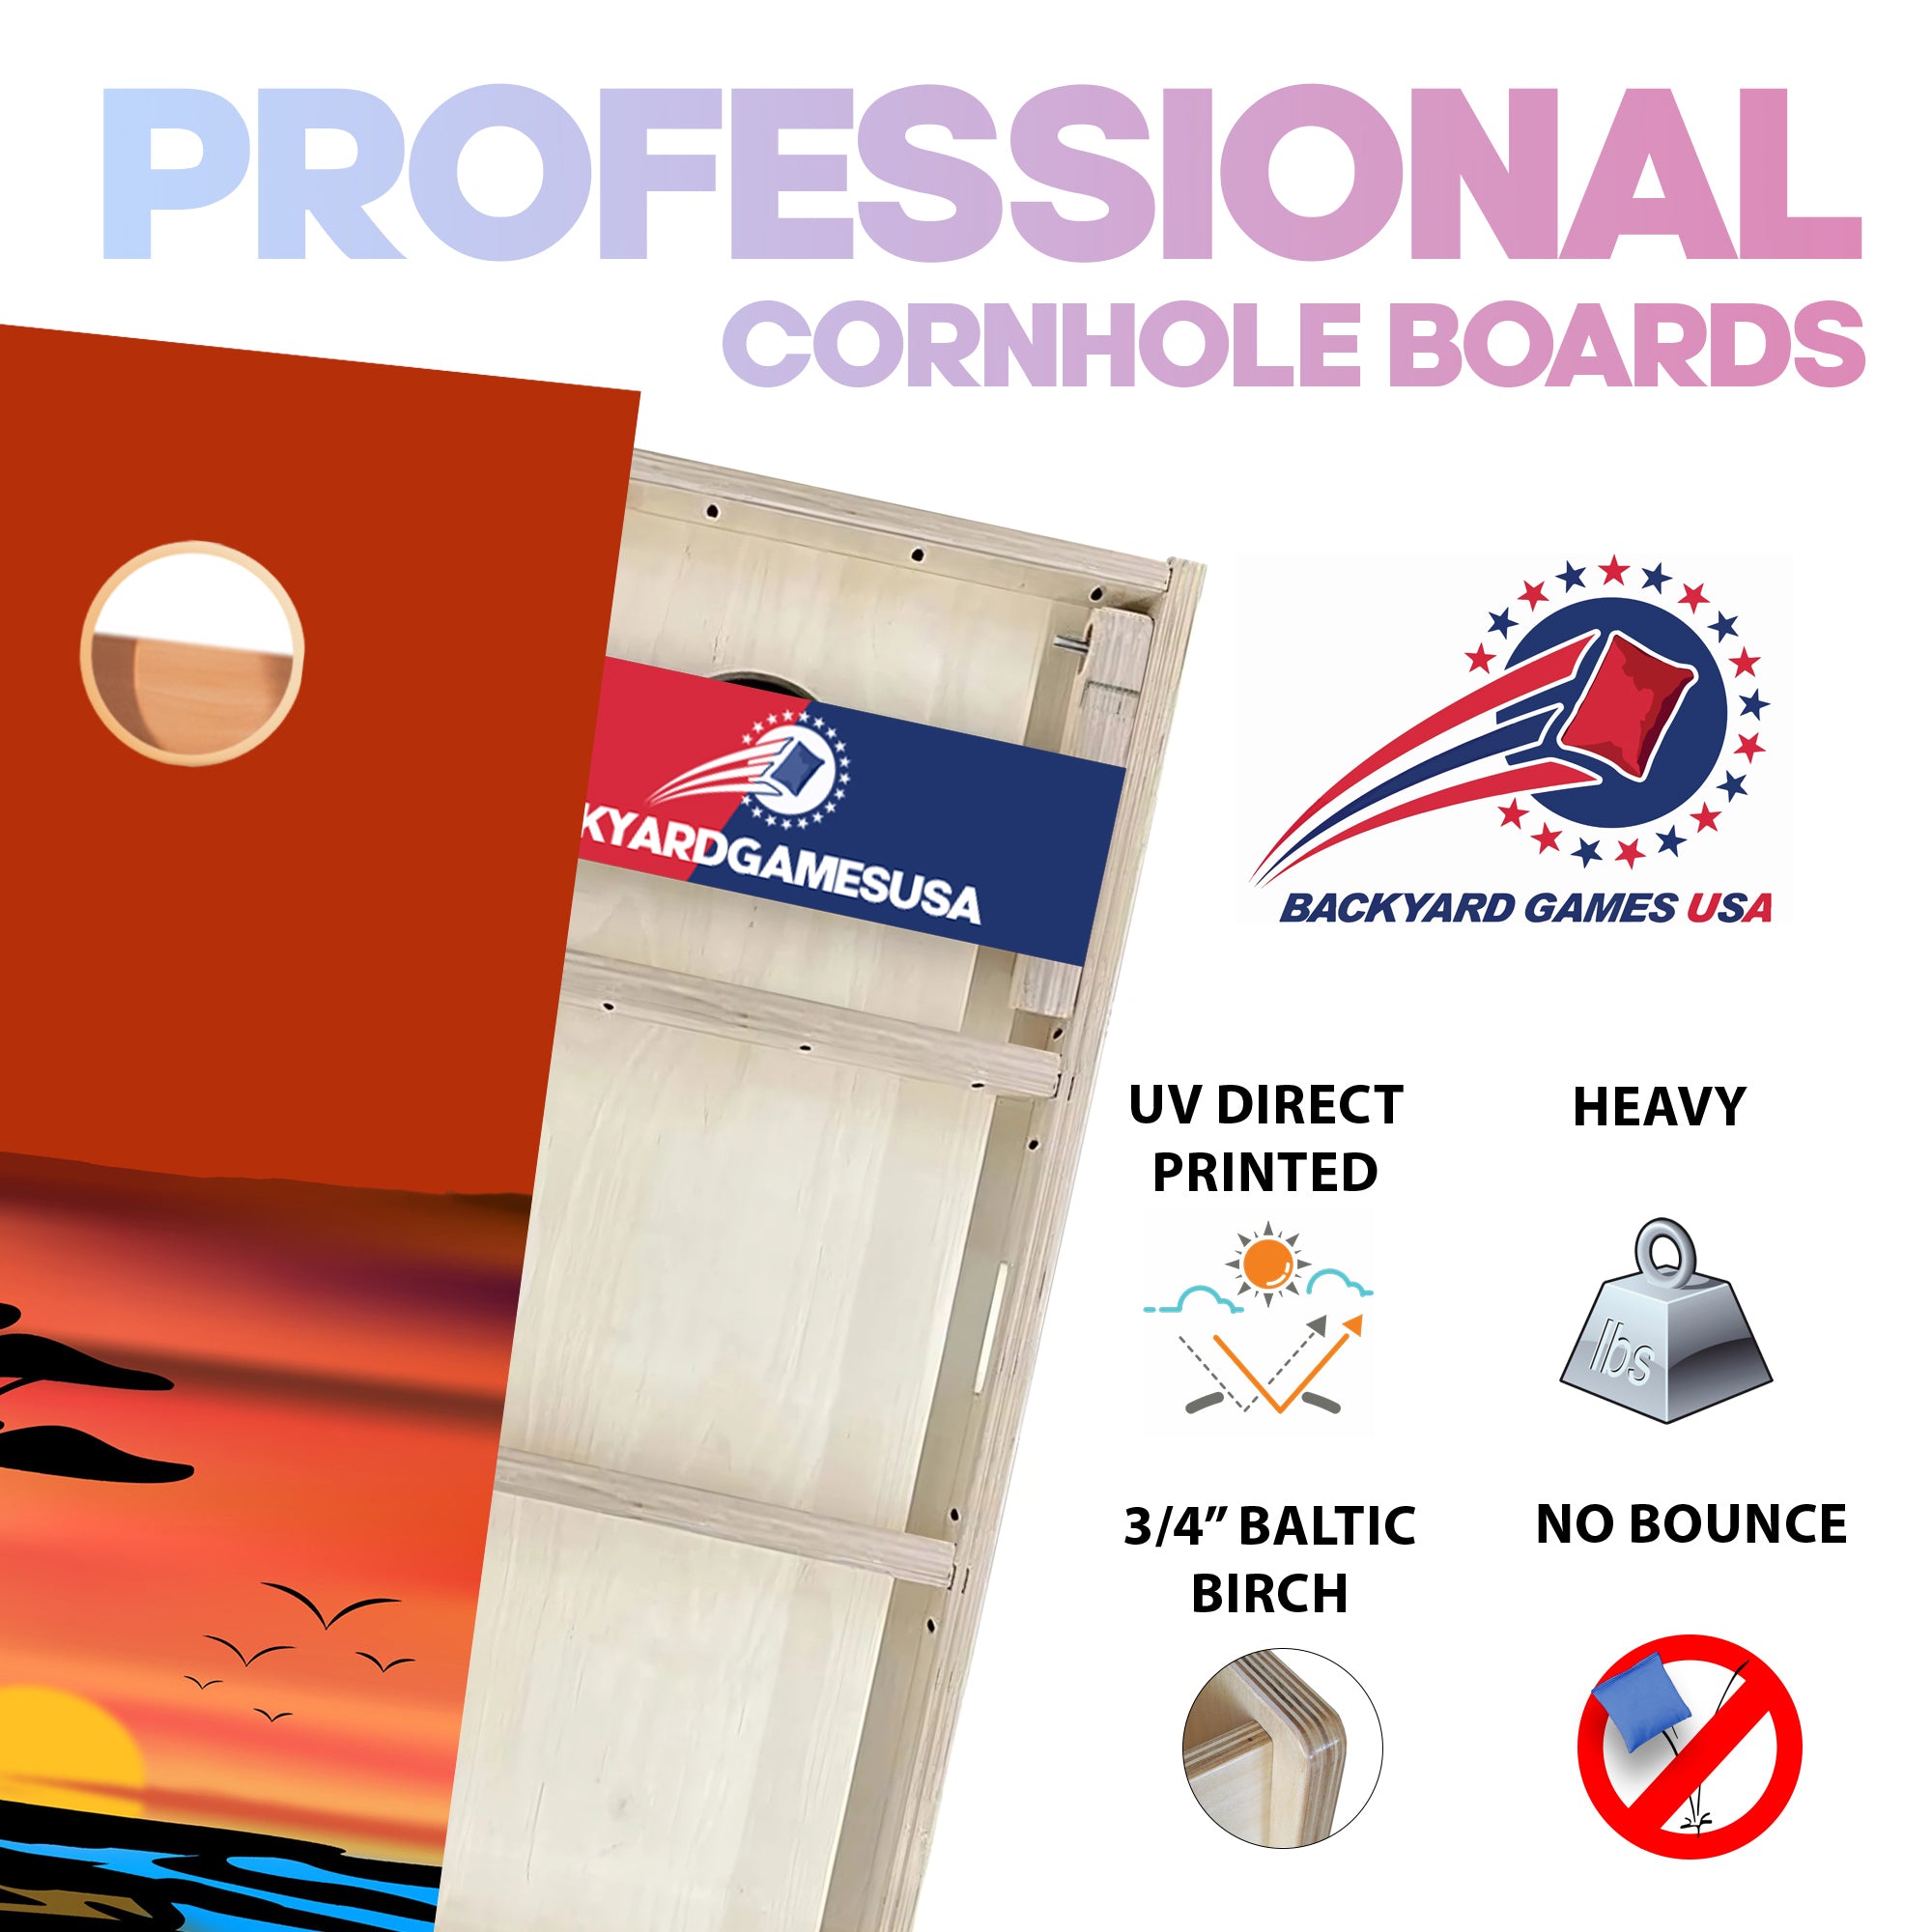 Tree Birds Sunset Professional Cornhole Boards